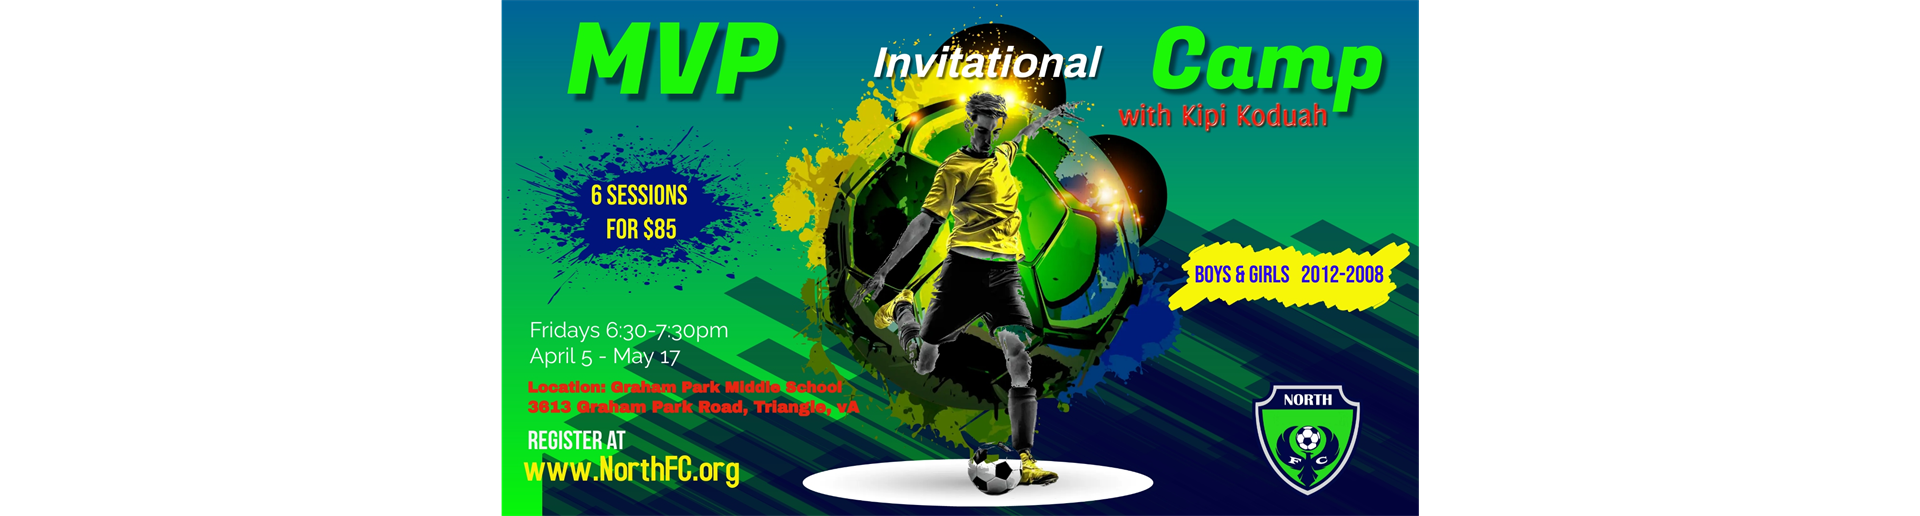 MVP Invitational Camp - REGISTRATION OPEN